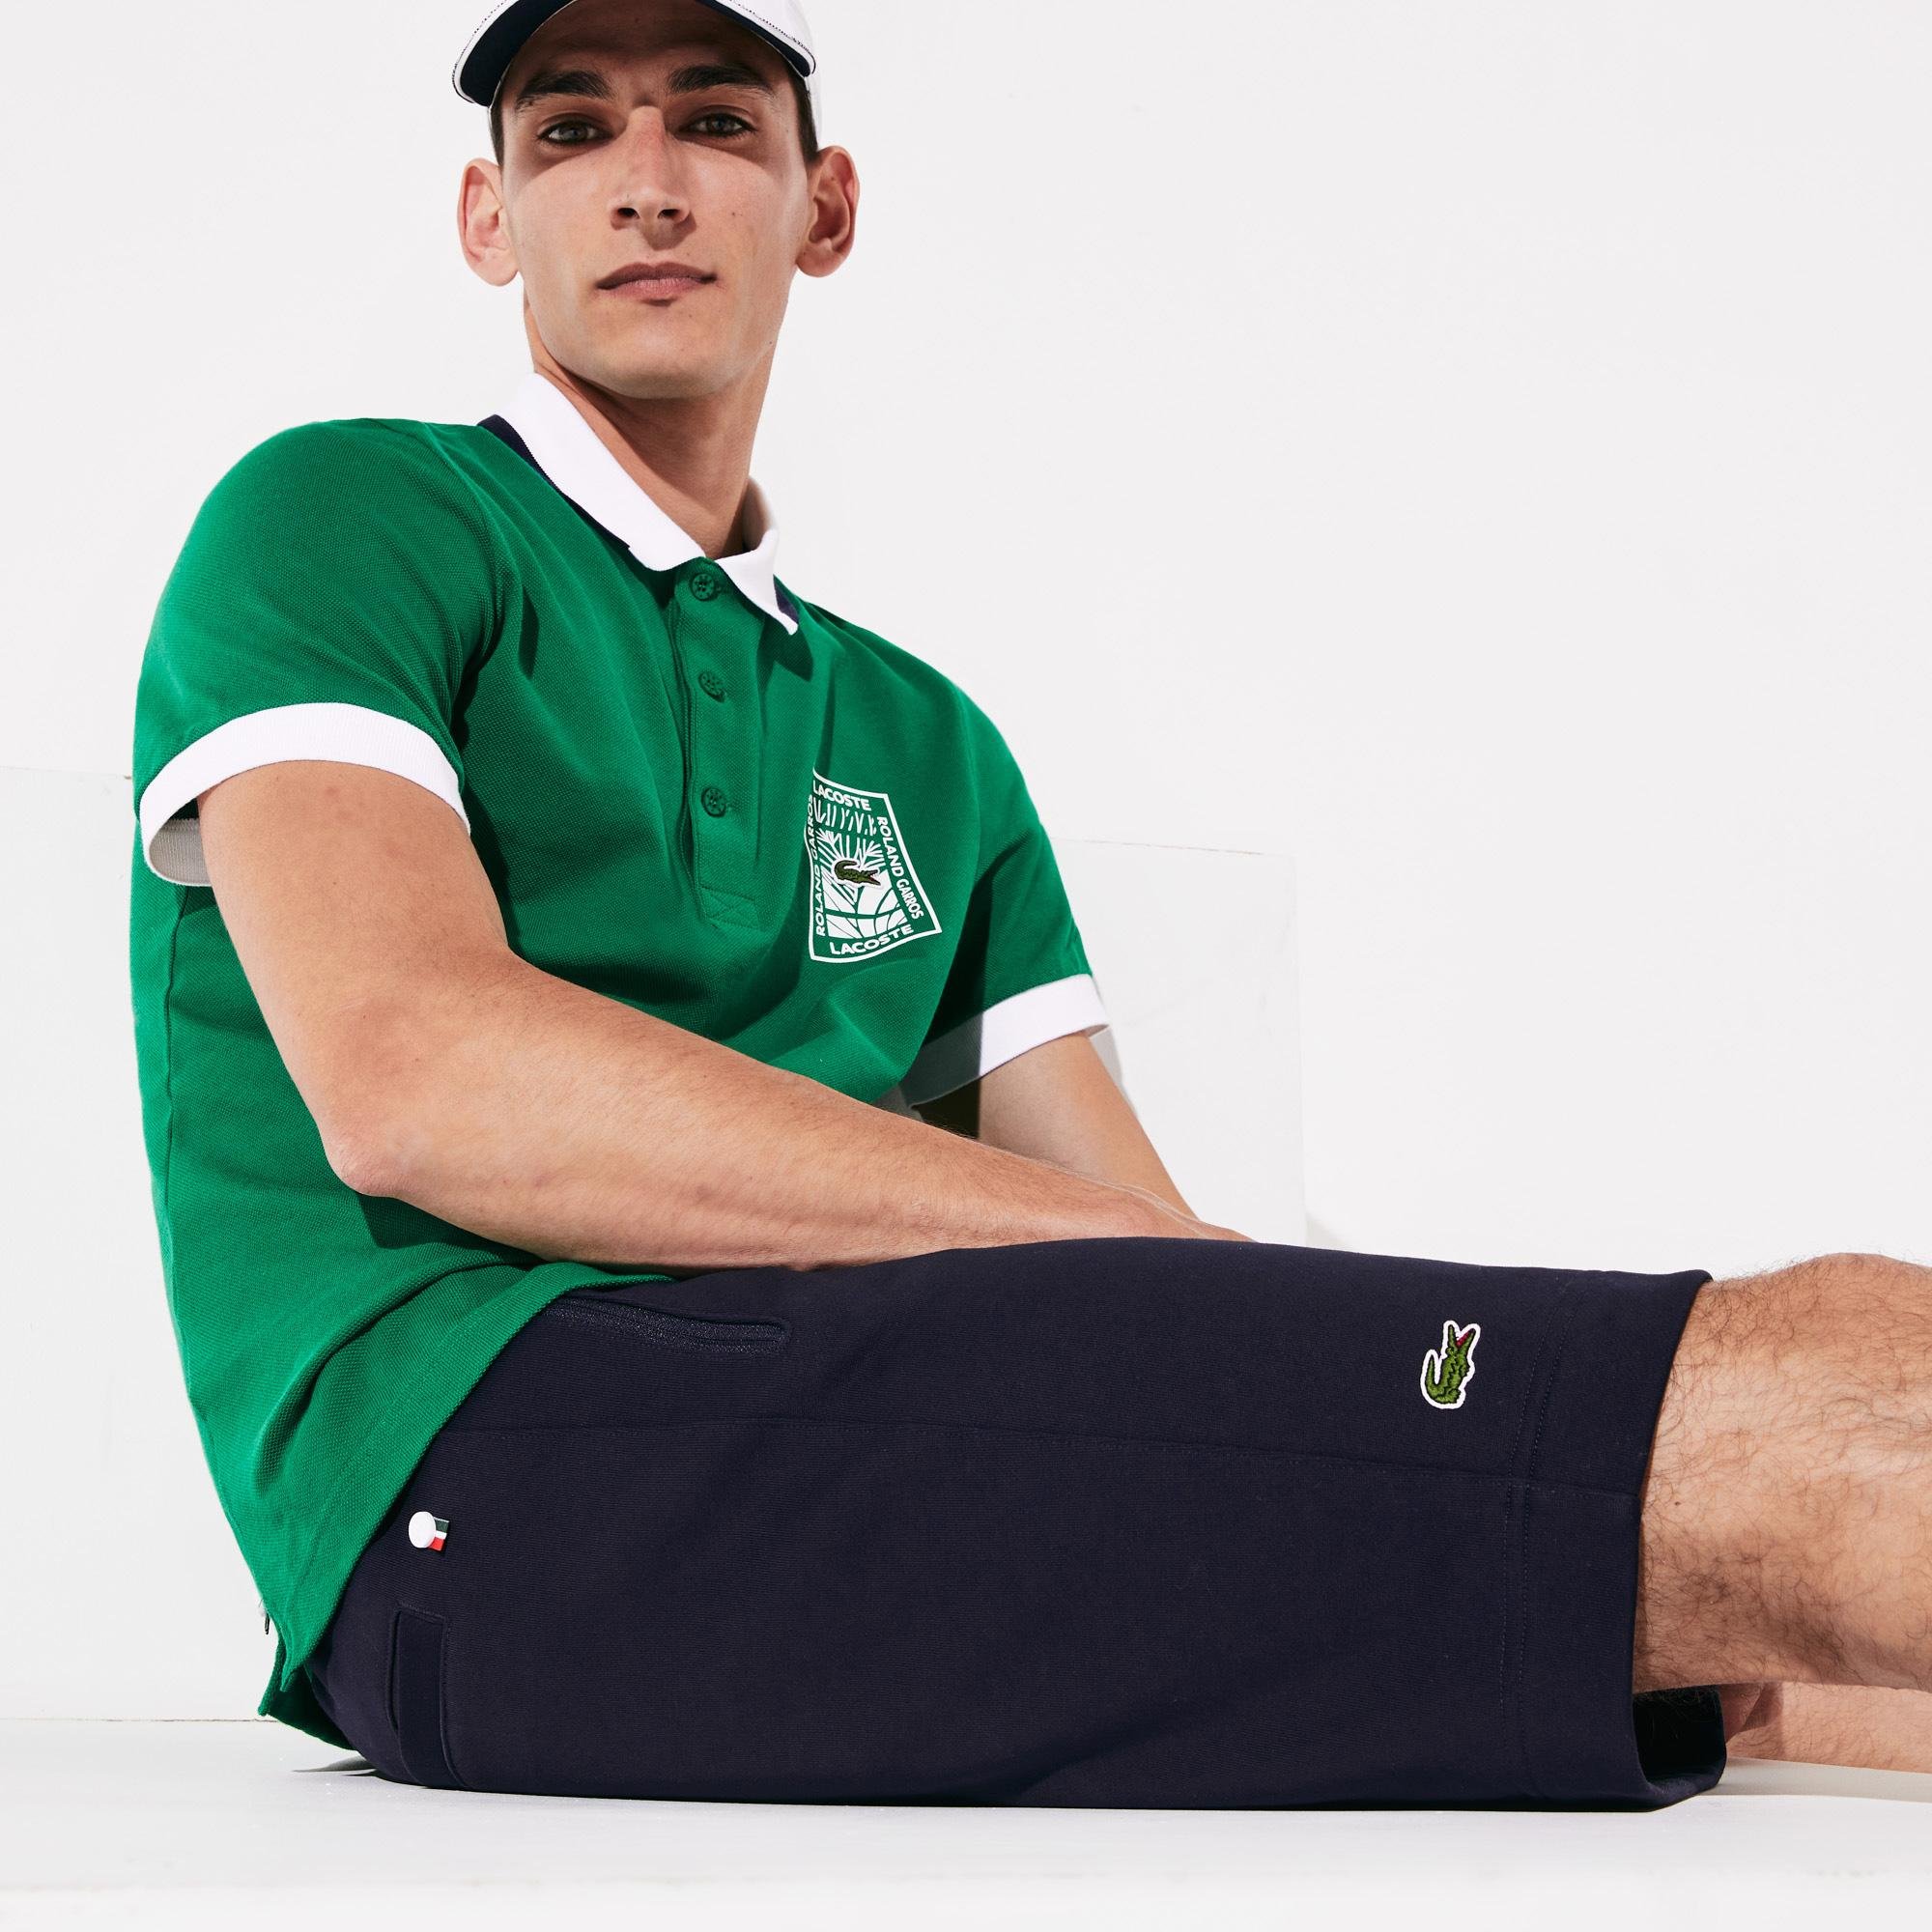 Lacoste mužskýe  sportovní šortky rouno bavlna Roland Garros